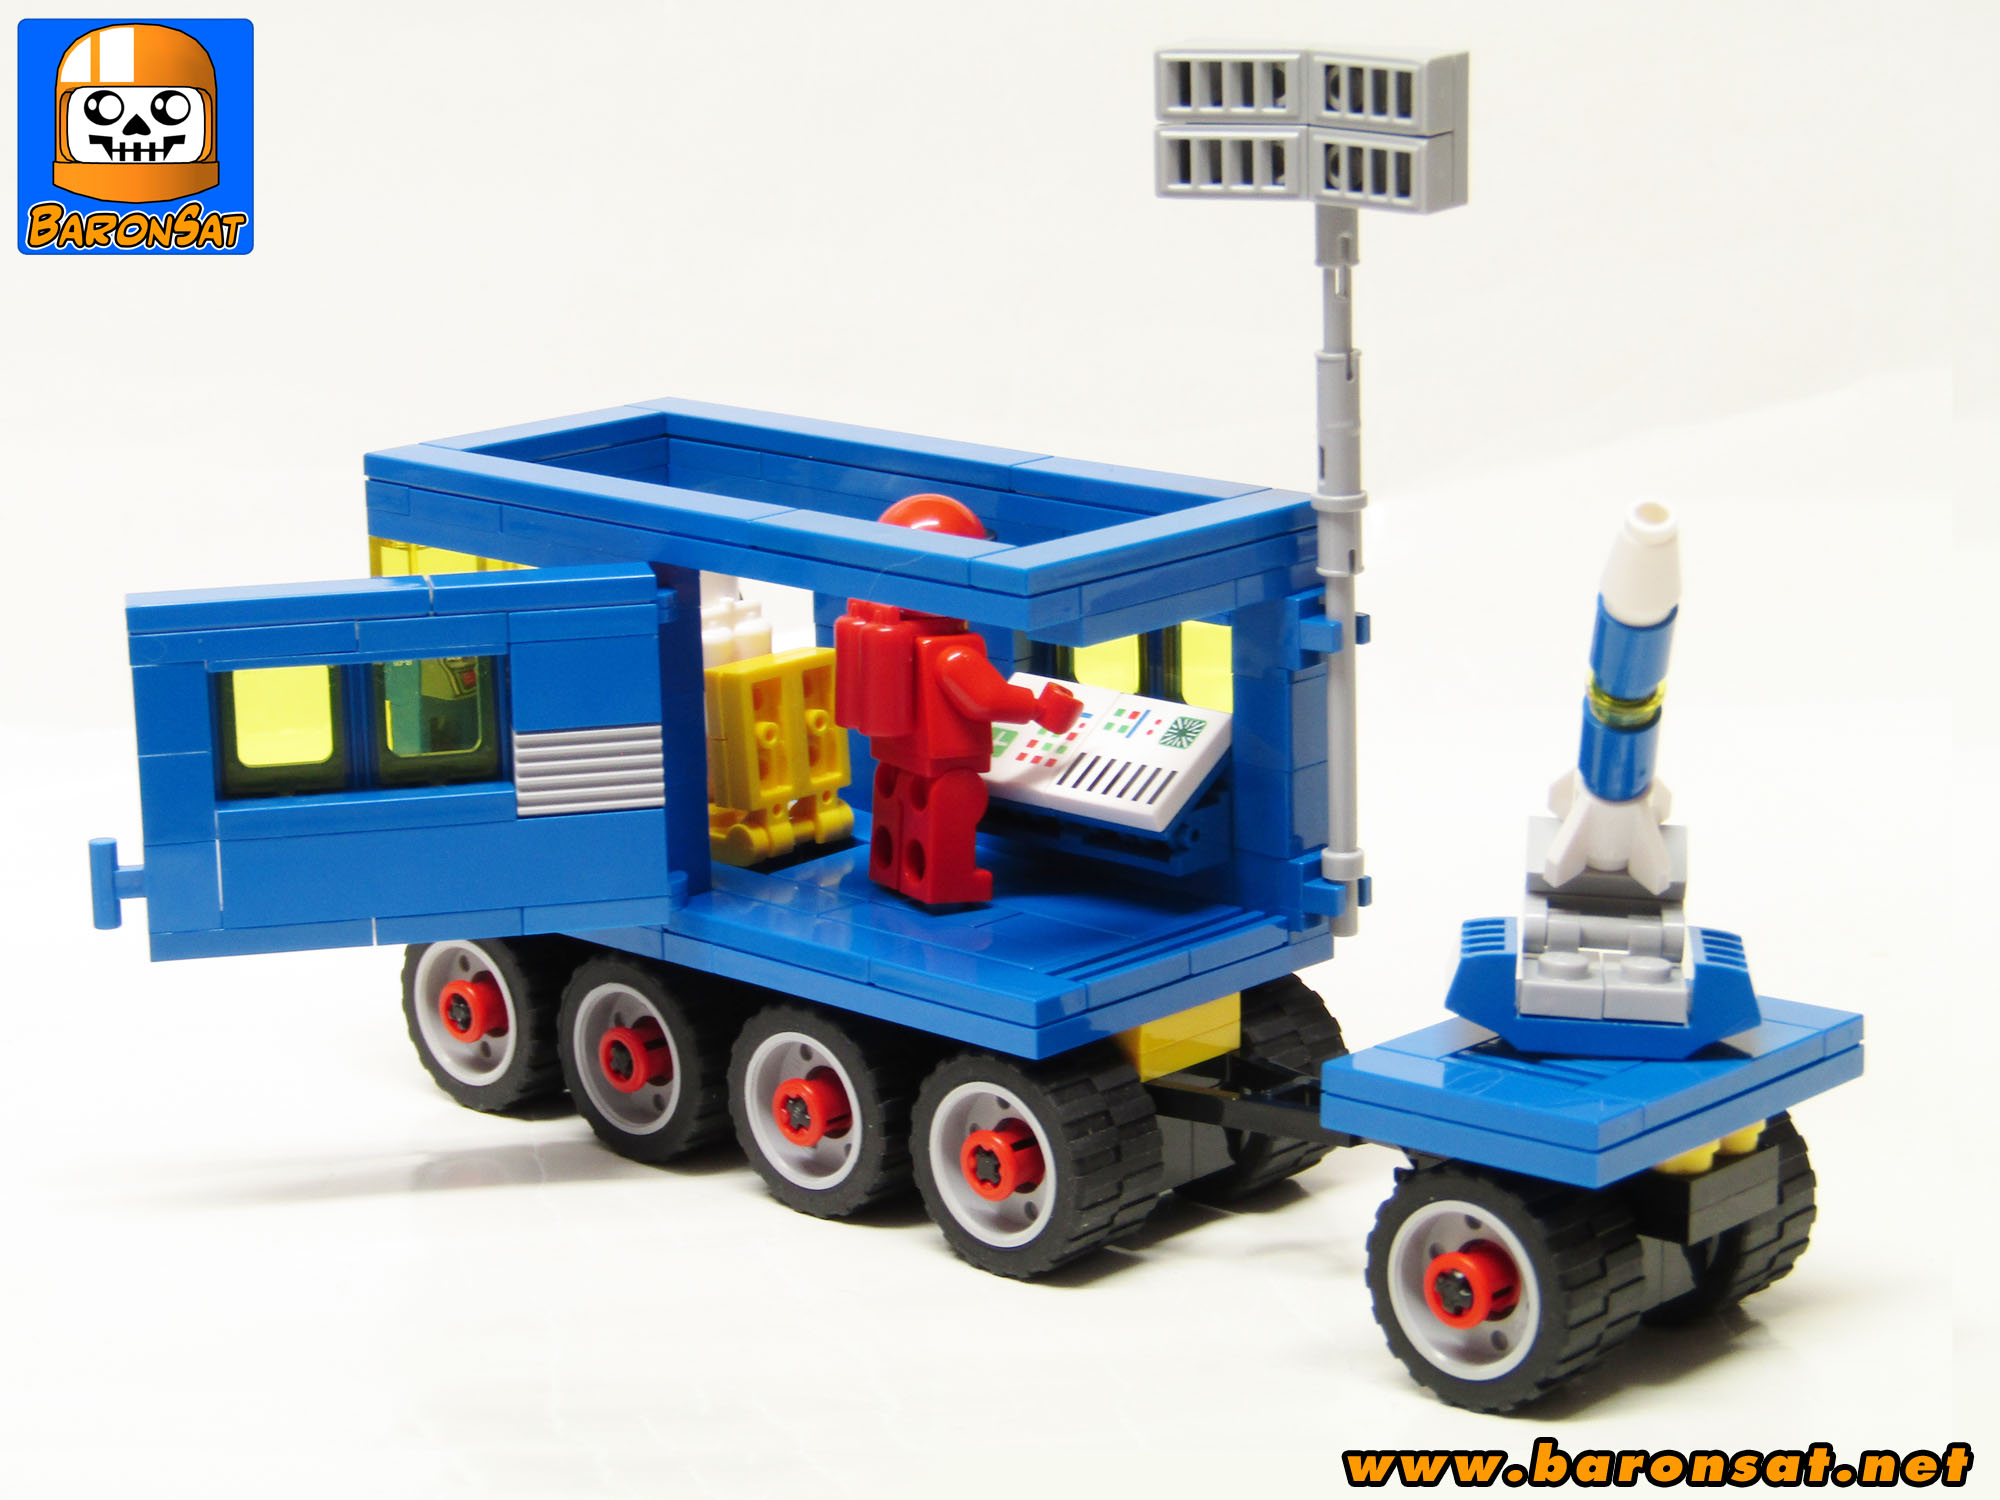 358 Rocket Base Moon Space Truck Lego moc model Interior